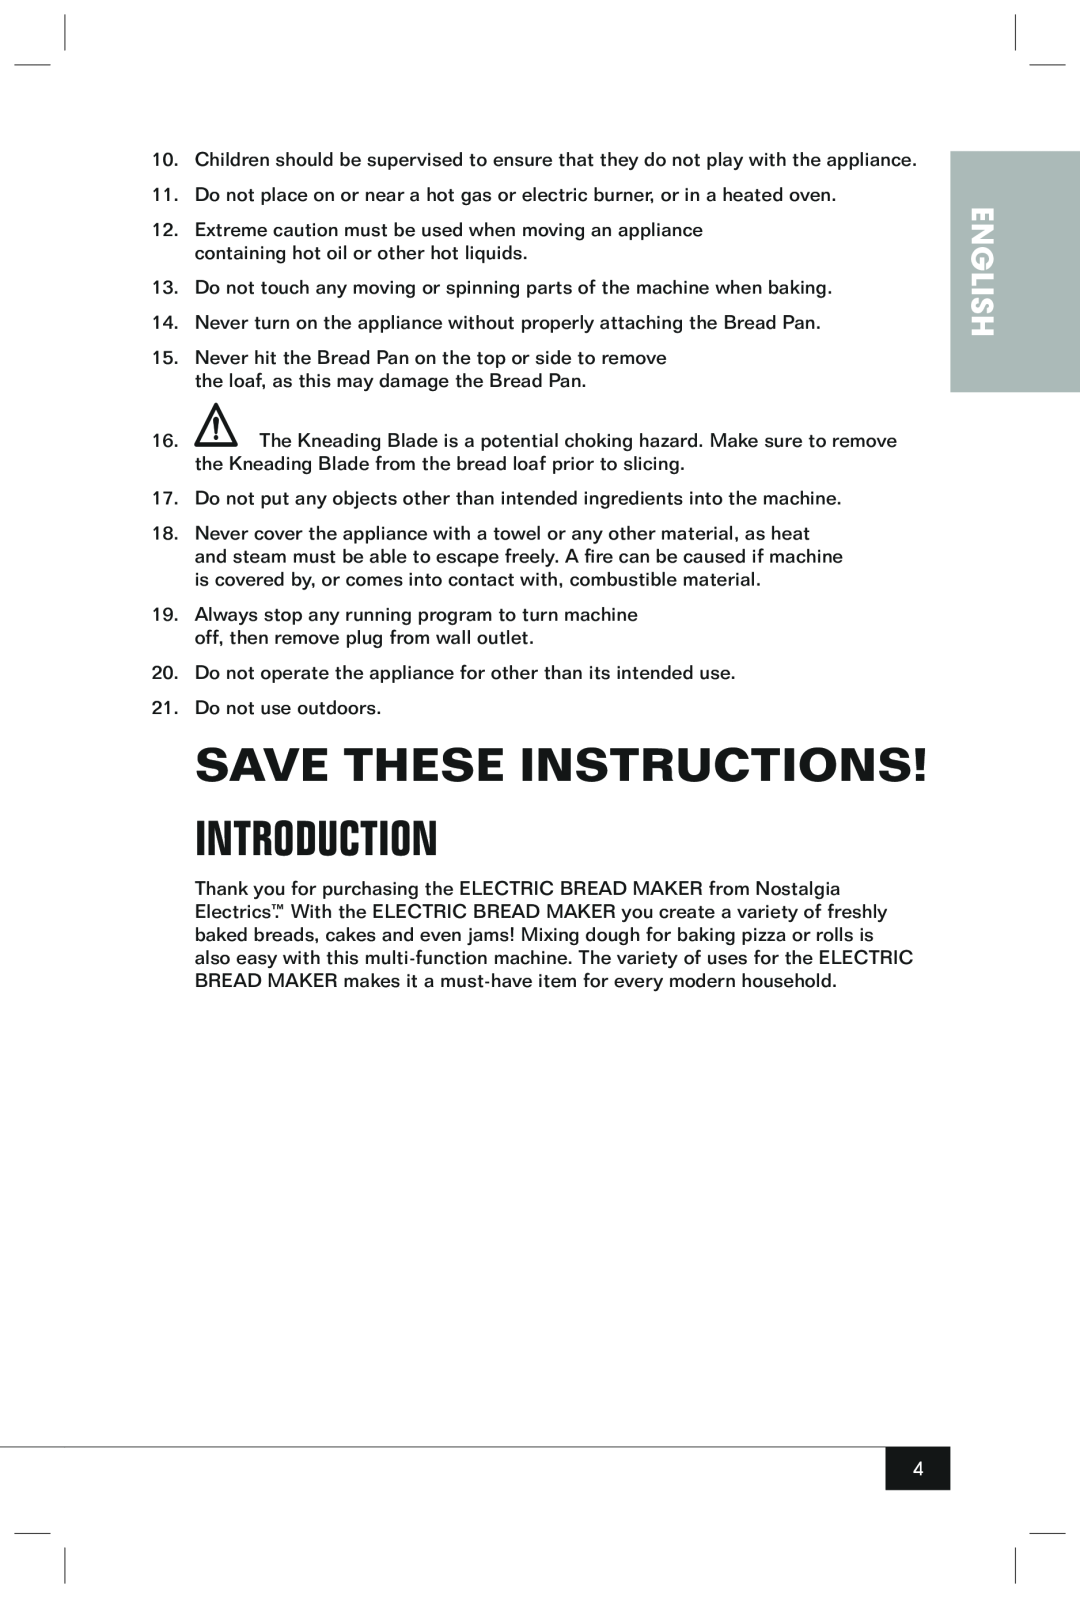 Nostalgia Electrics BMM100 manual Introduction, Save These Instructions, English 